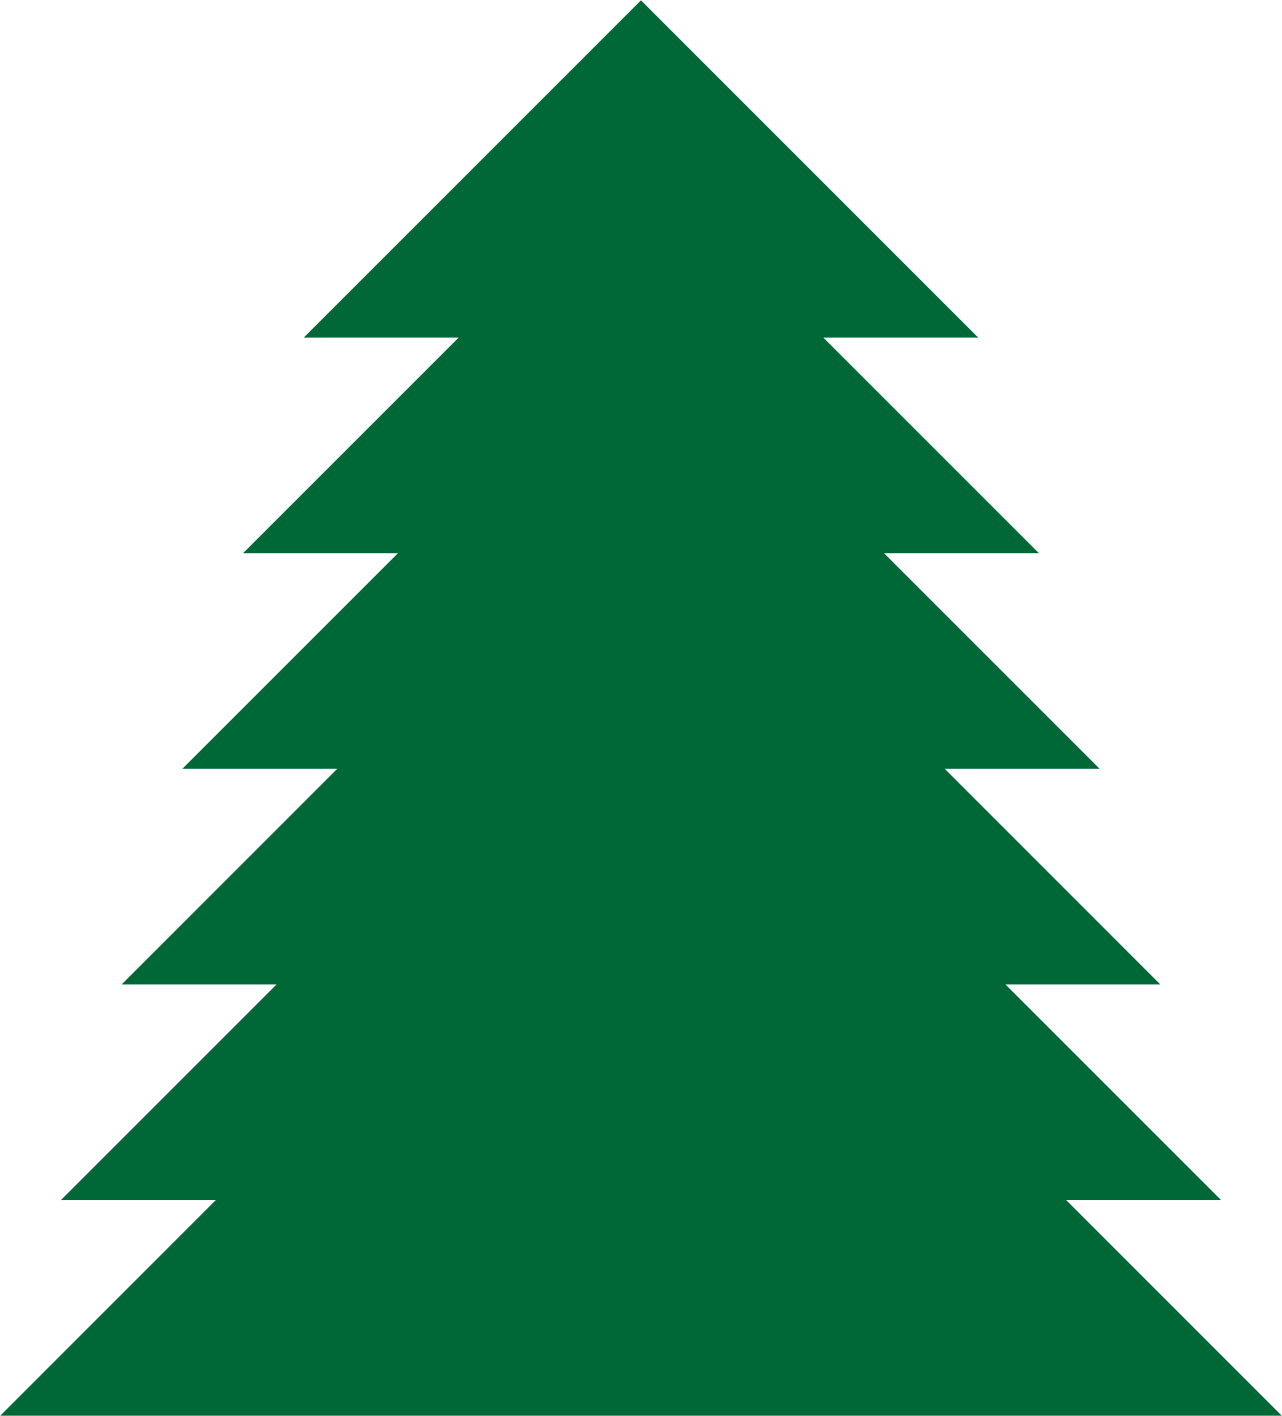 Pine tree silhouette clipart 3 - Cliparting.com